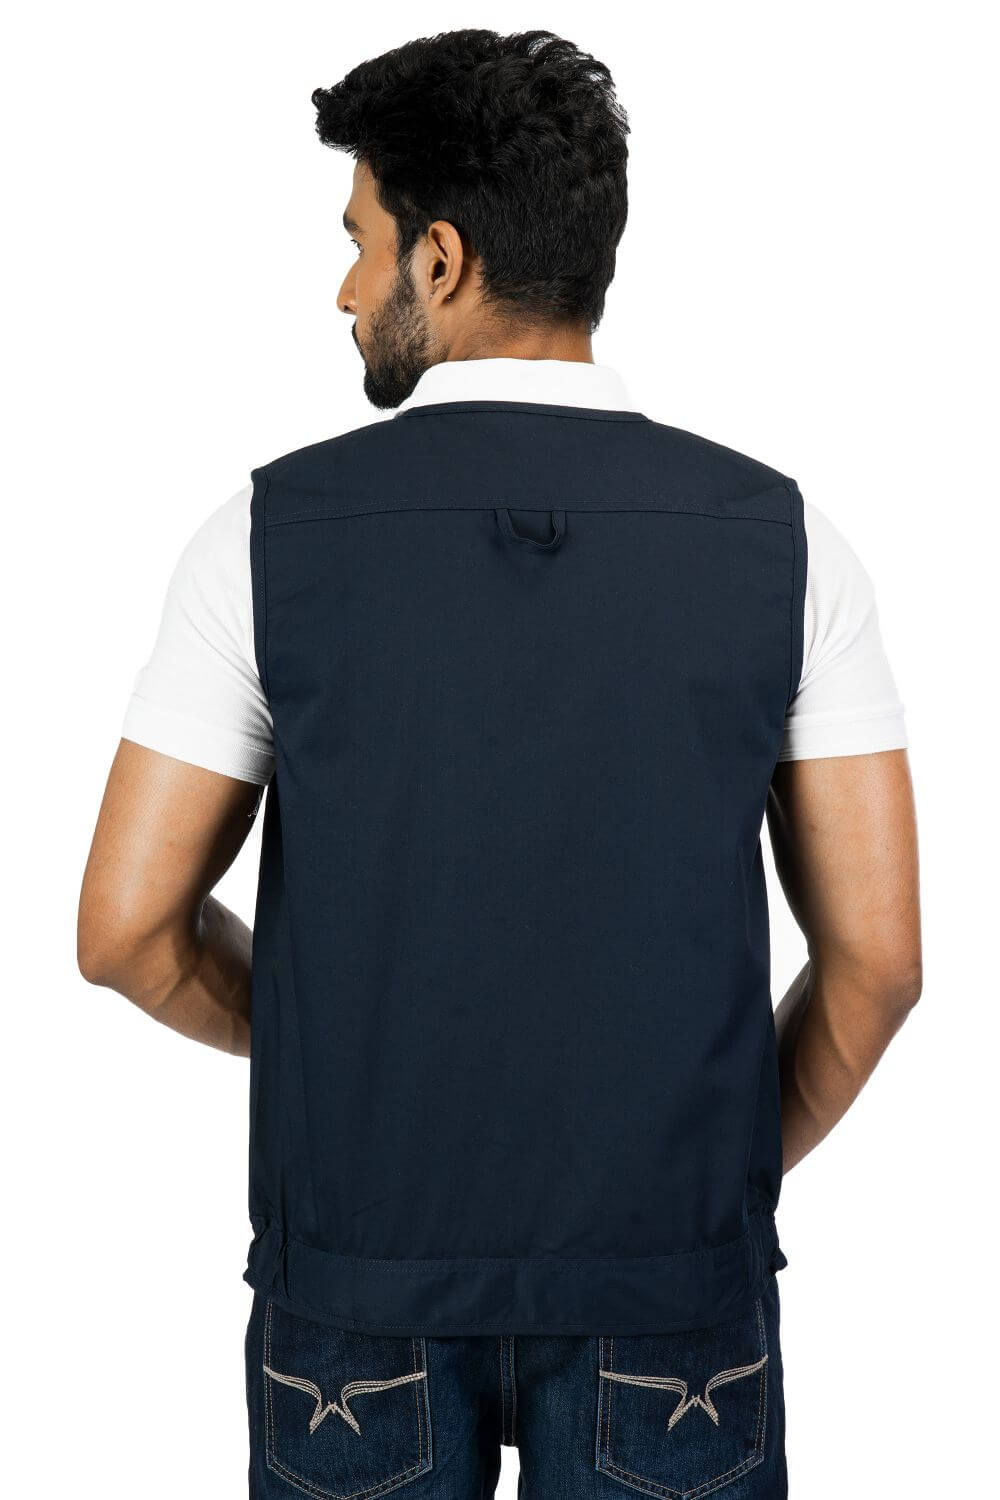 Ergonomically designed multi-utility vest